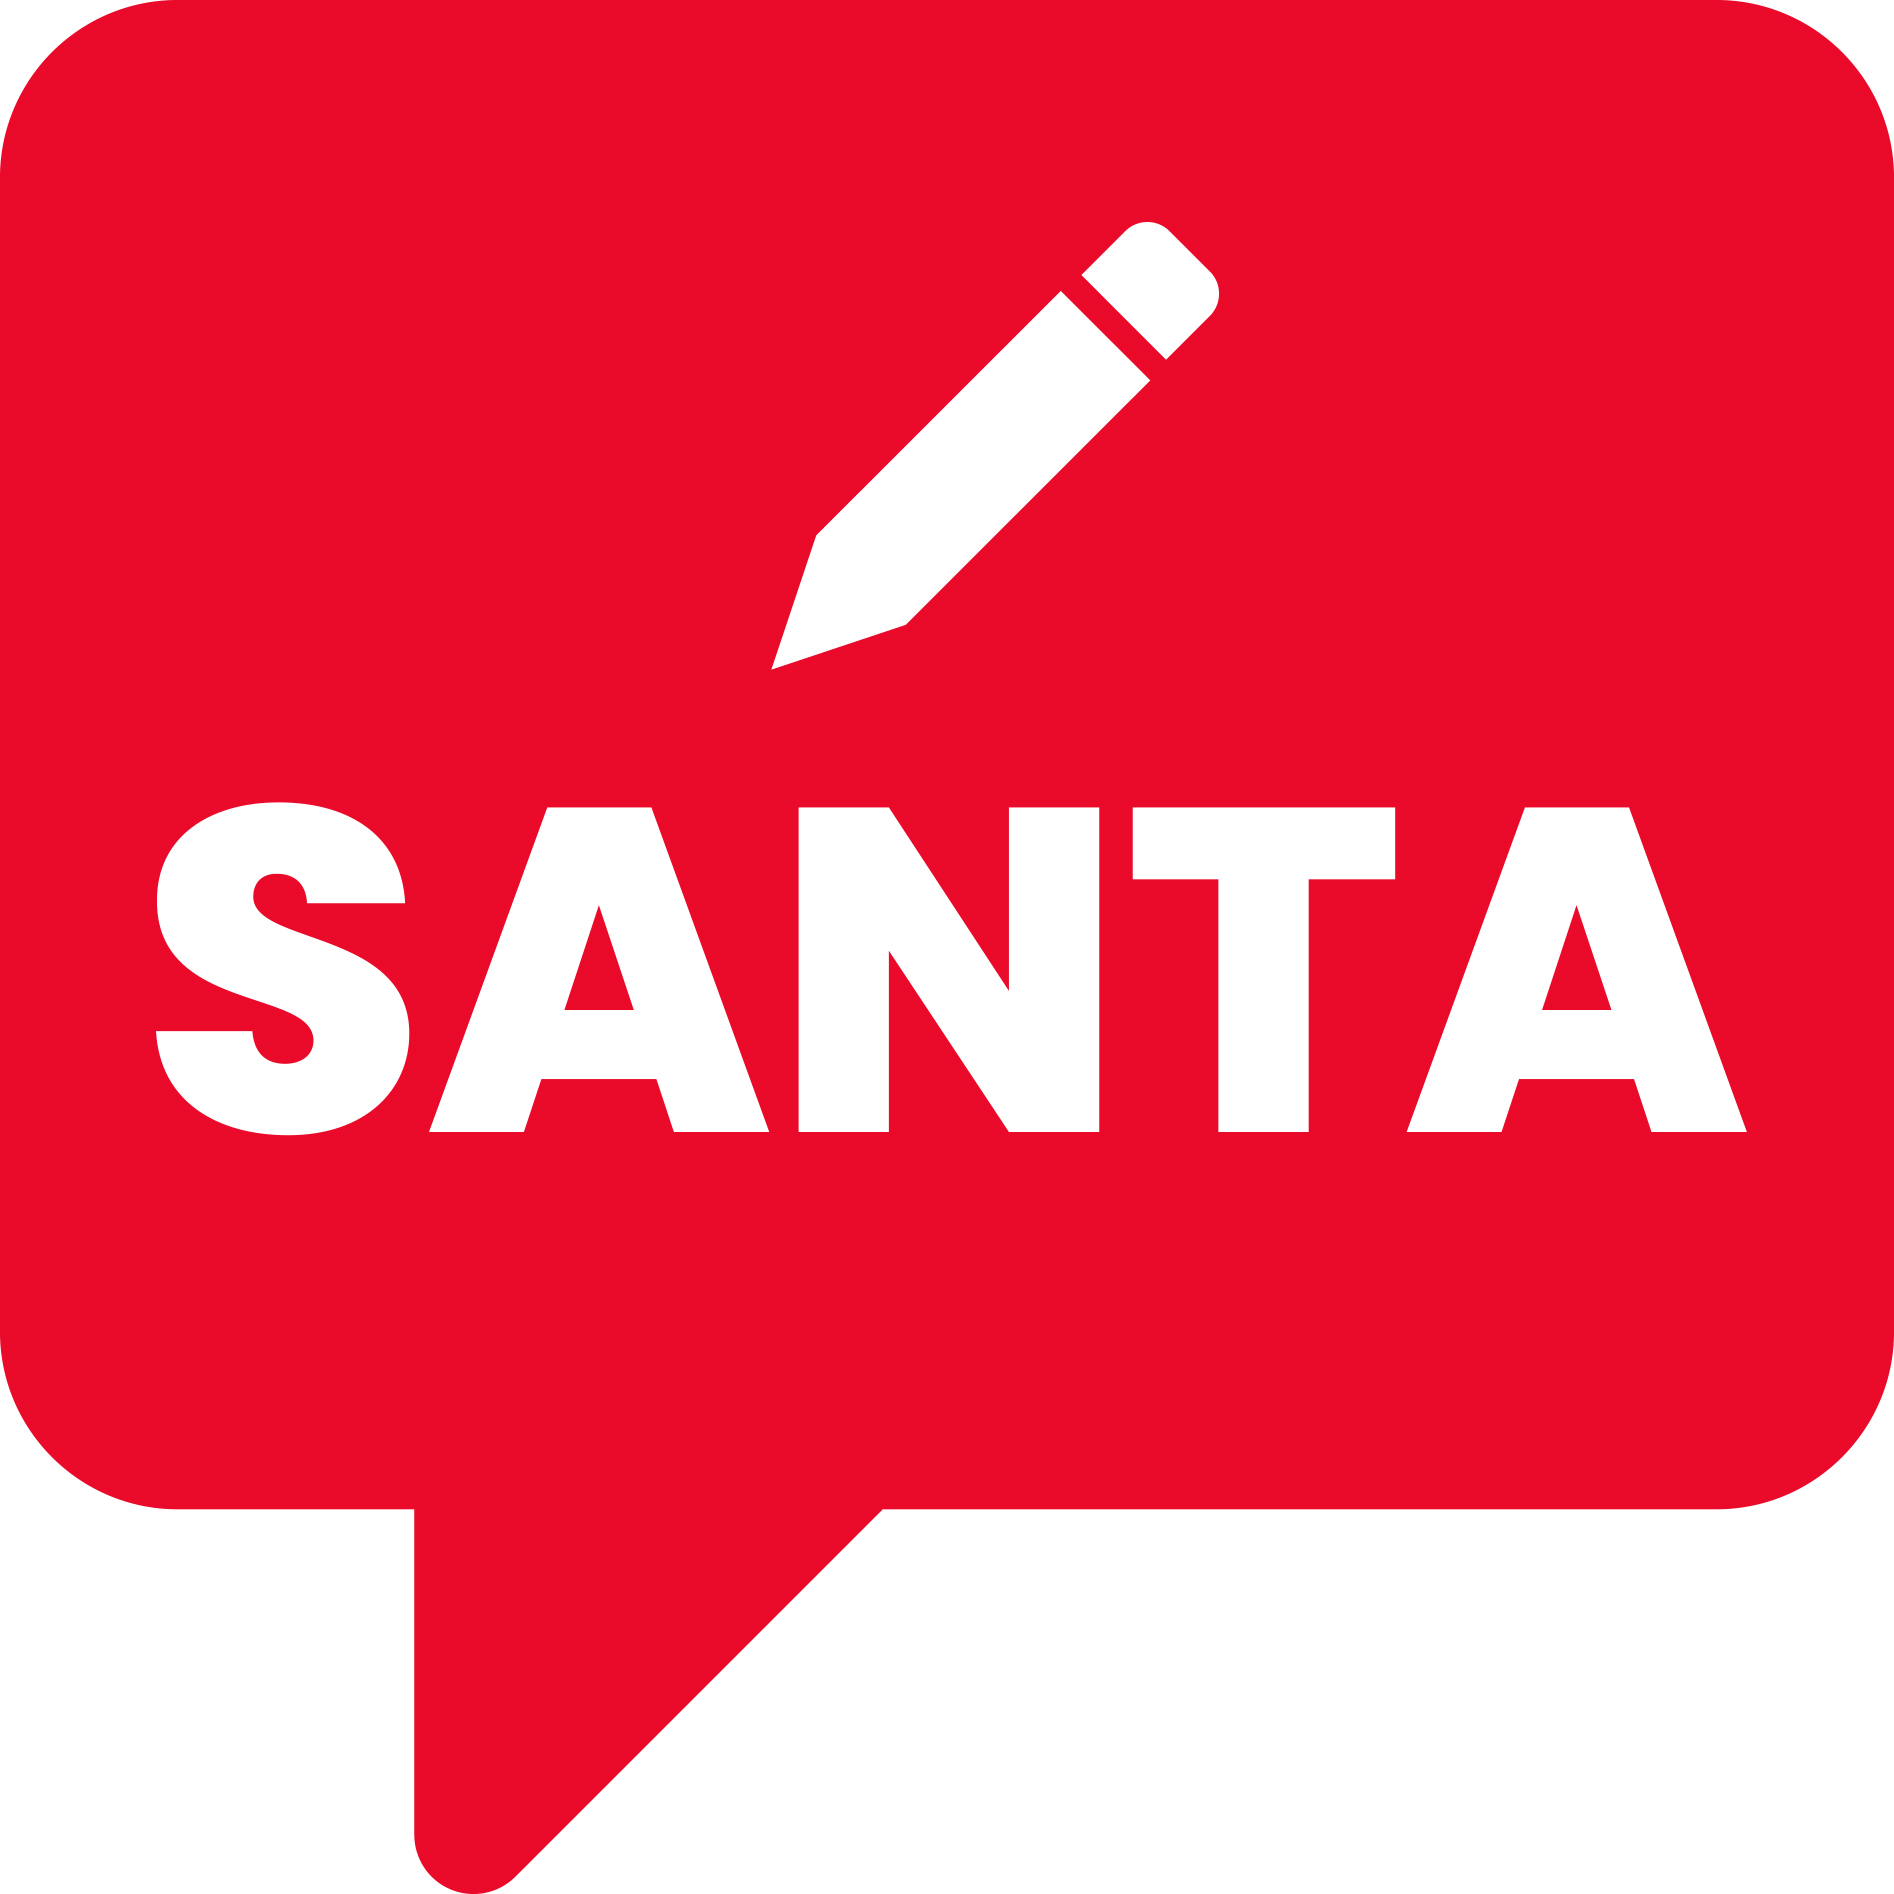 conversation box with word Santa